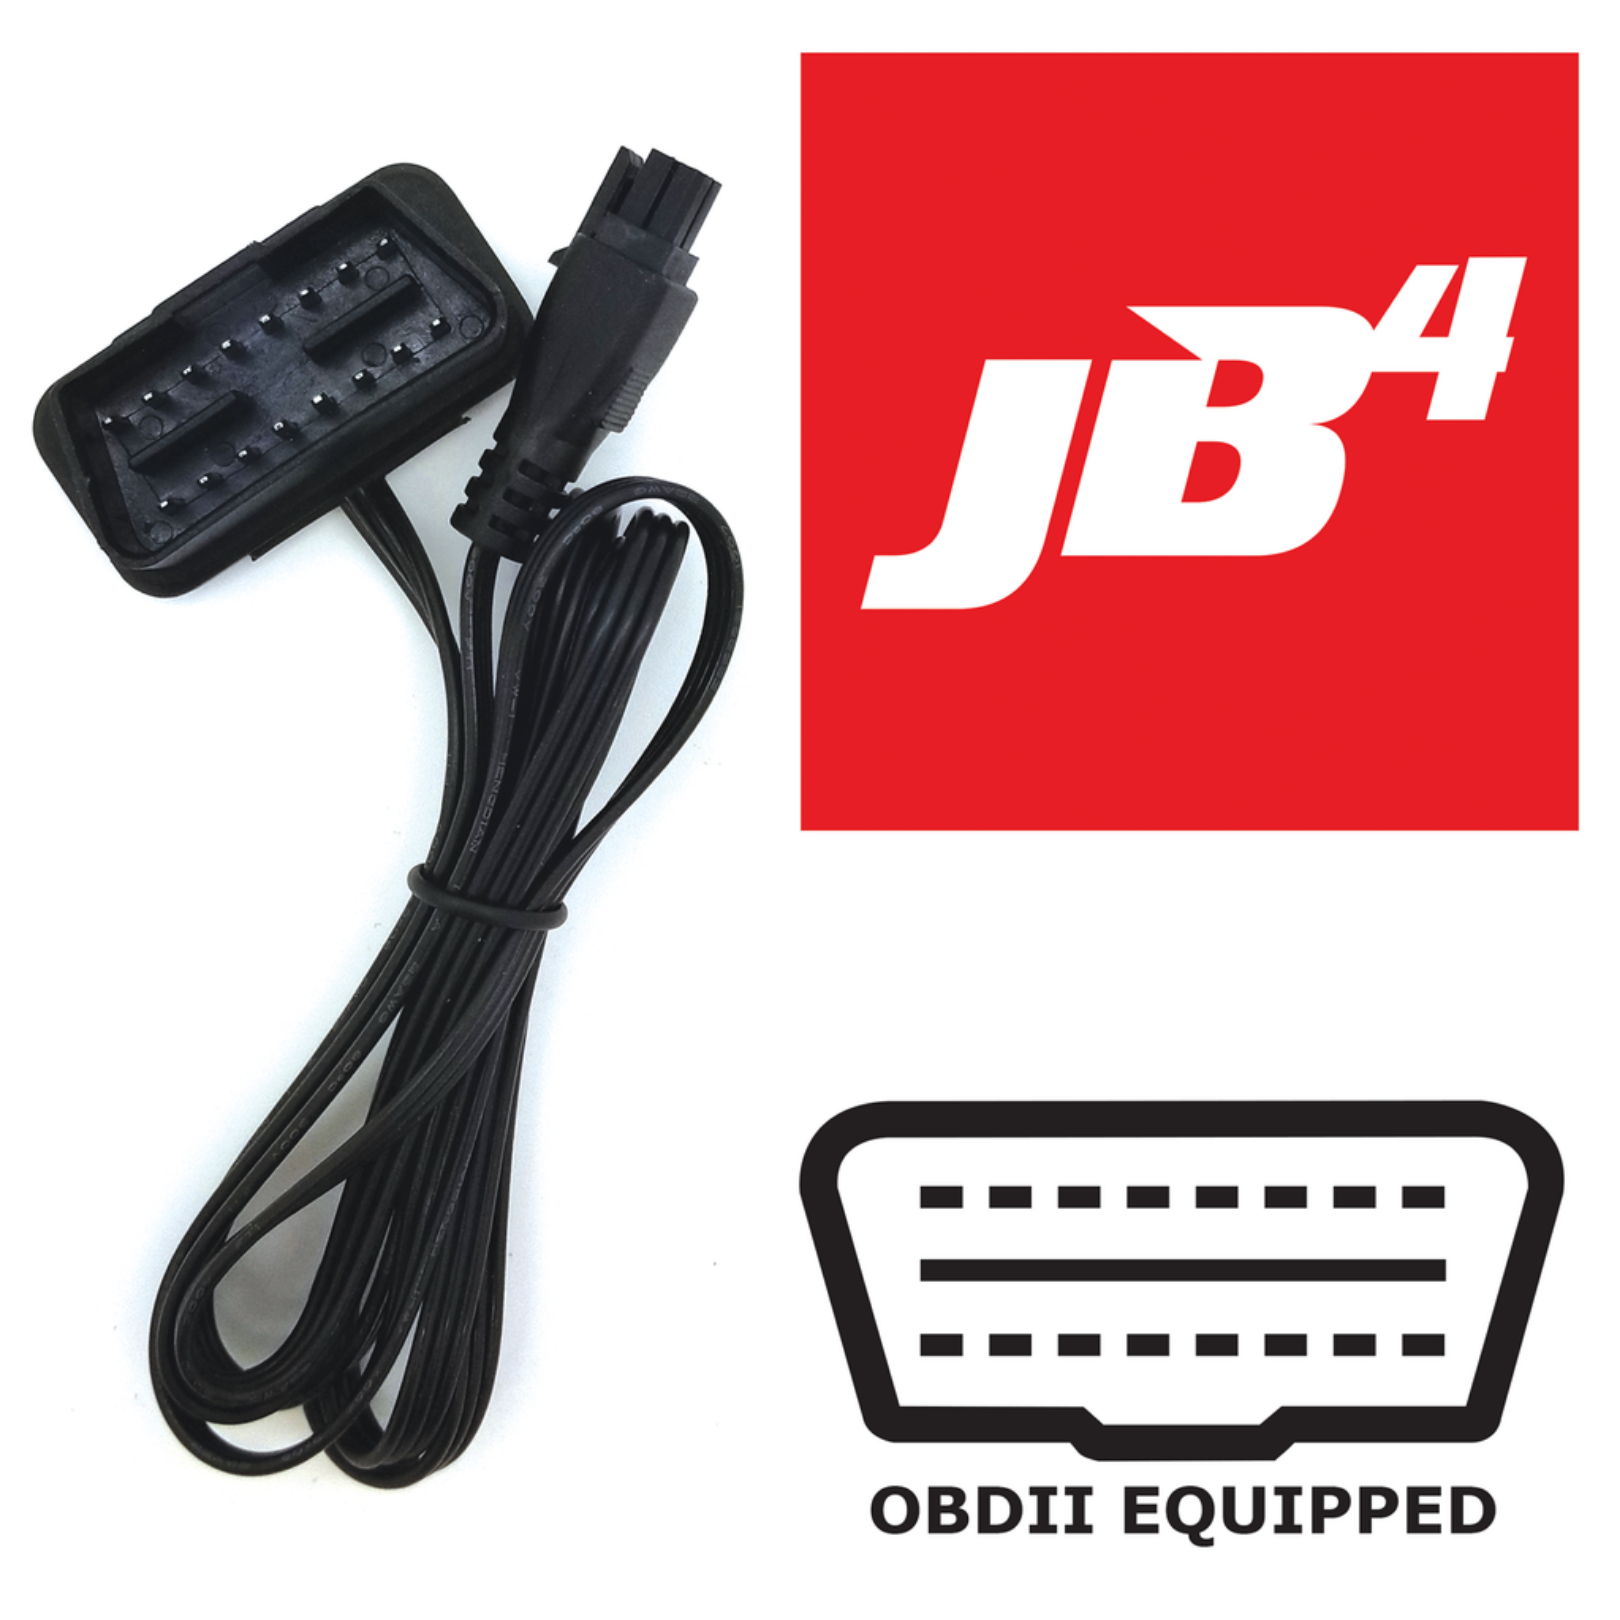 JB1 Tuner for VW MK7 & 7.5 GOLF GTI & PERFORMANCE PACK